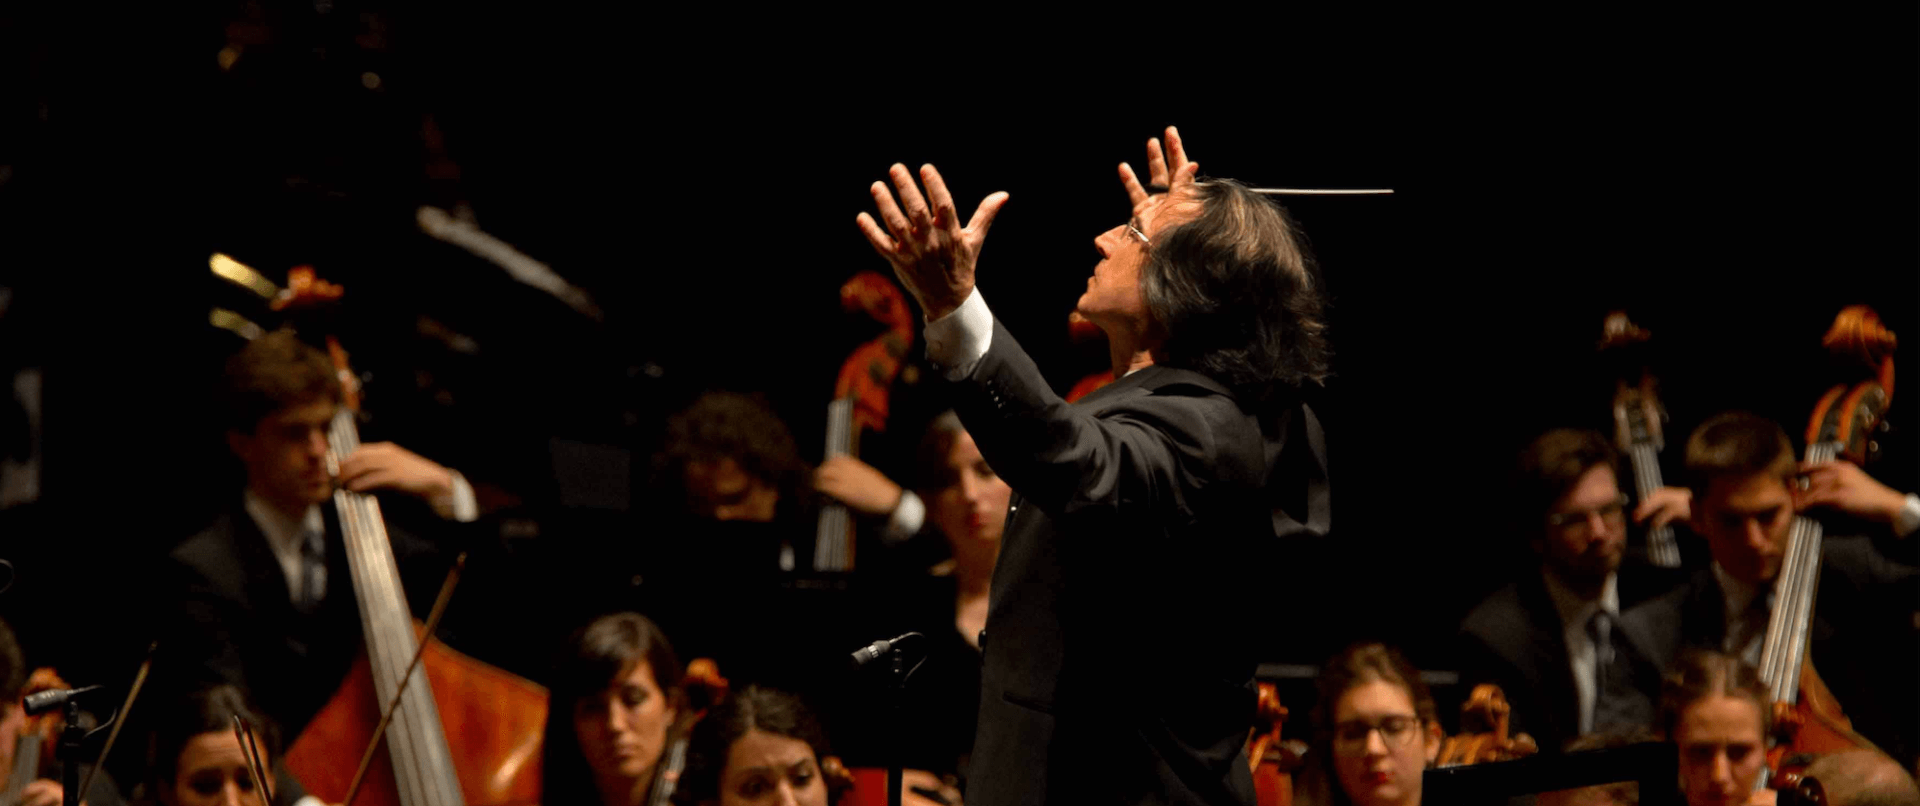 Riccardo Muti & Orchestra Giovanile Cherubini +++ SUSPENDED rescheduled on Monday 8 March 2021 ++++